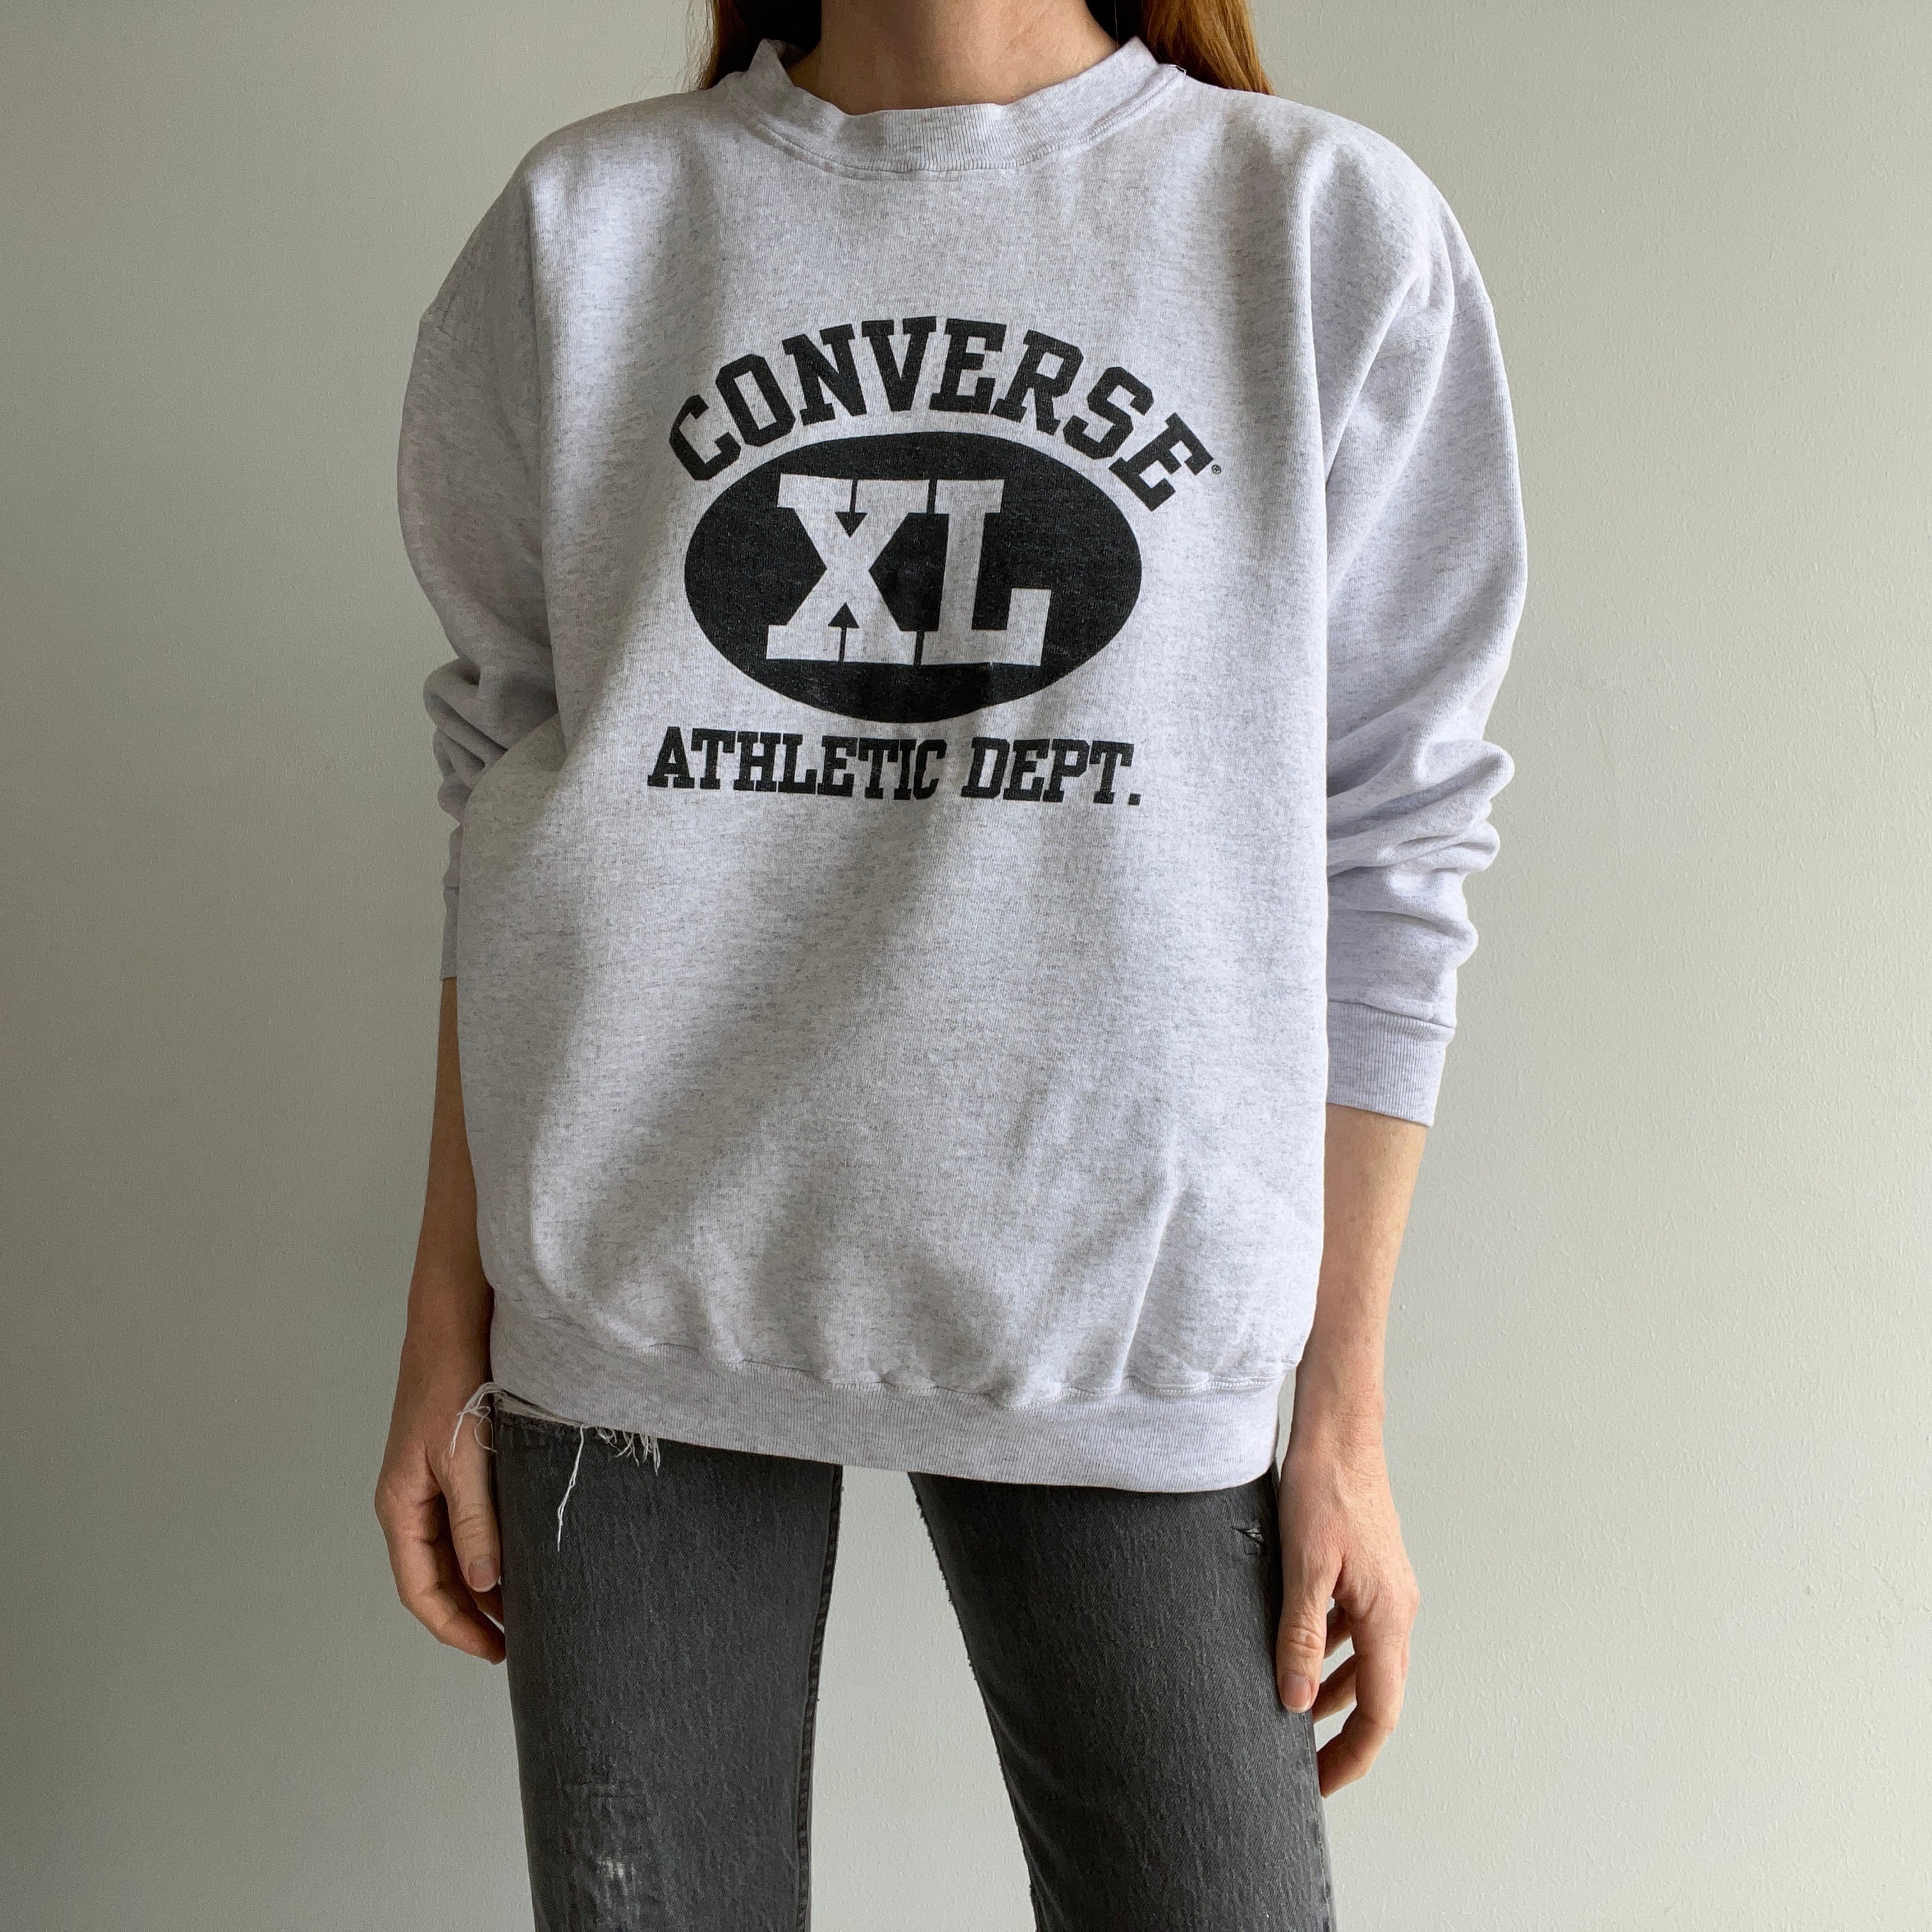 1990s USA MADE Converse Sweatshirt - !!!